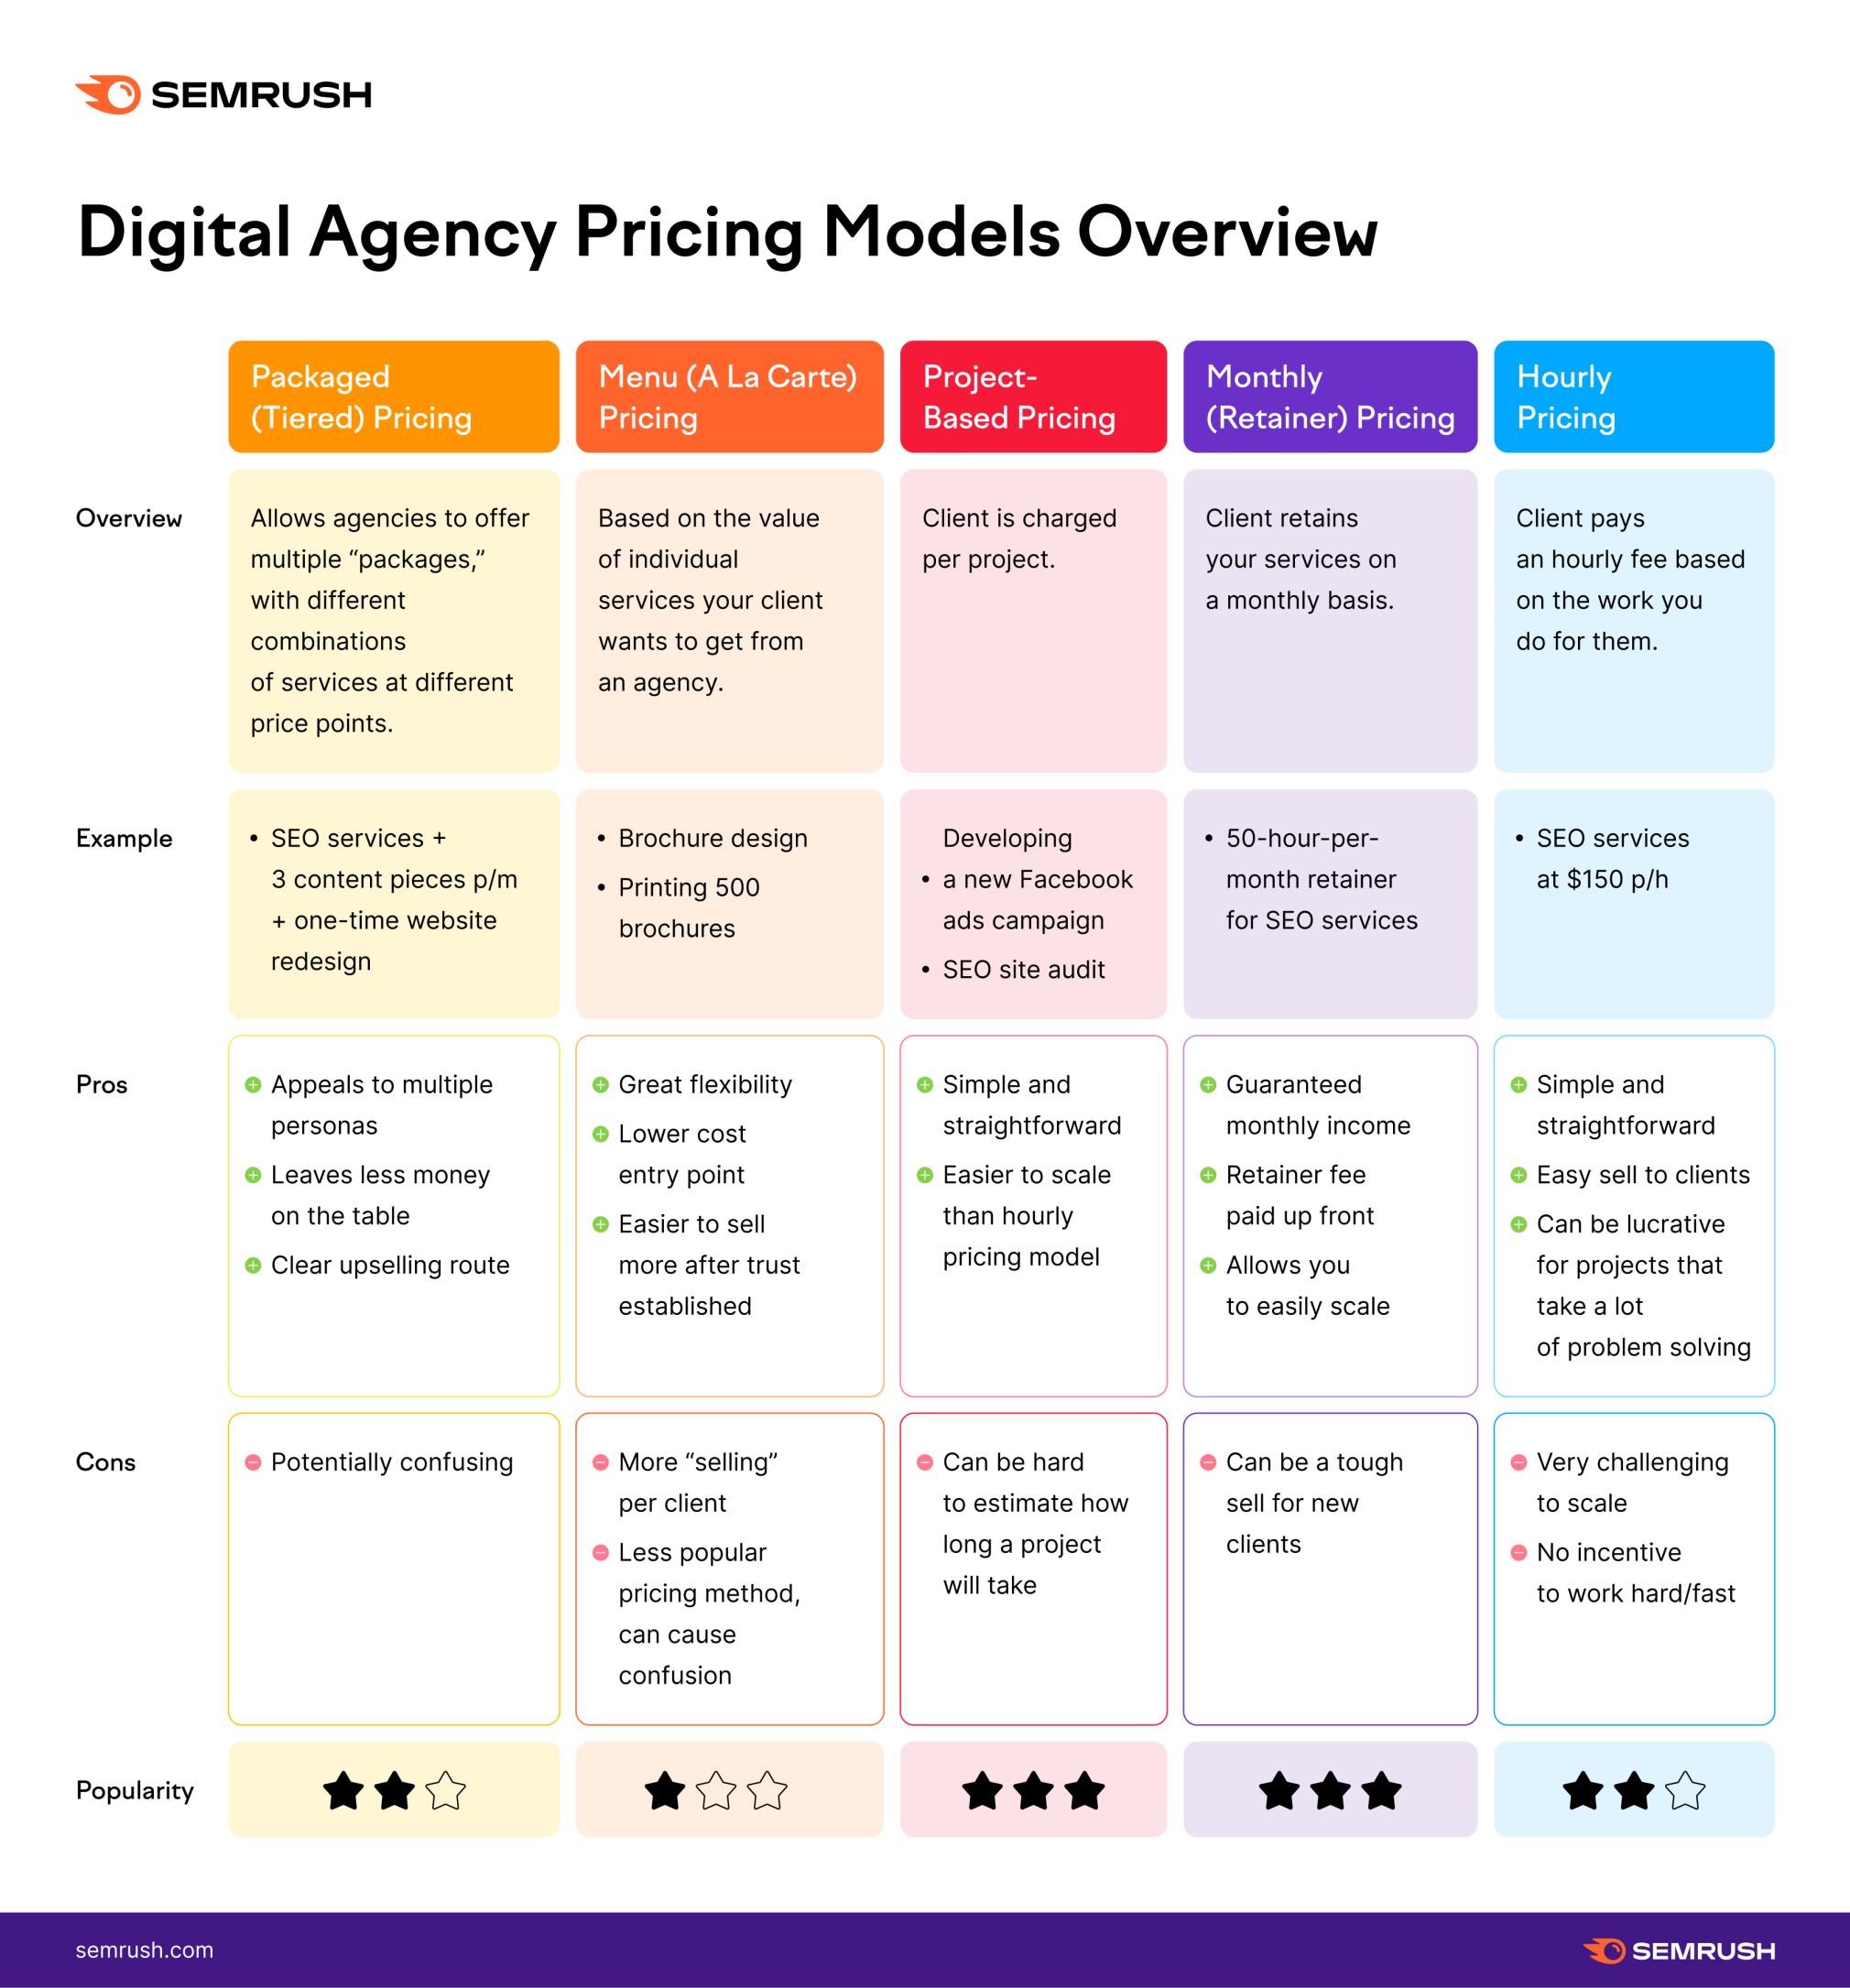 The Digital Agency Business Model